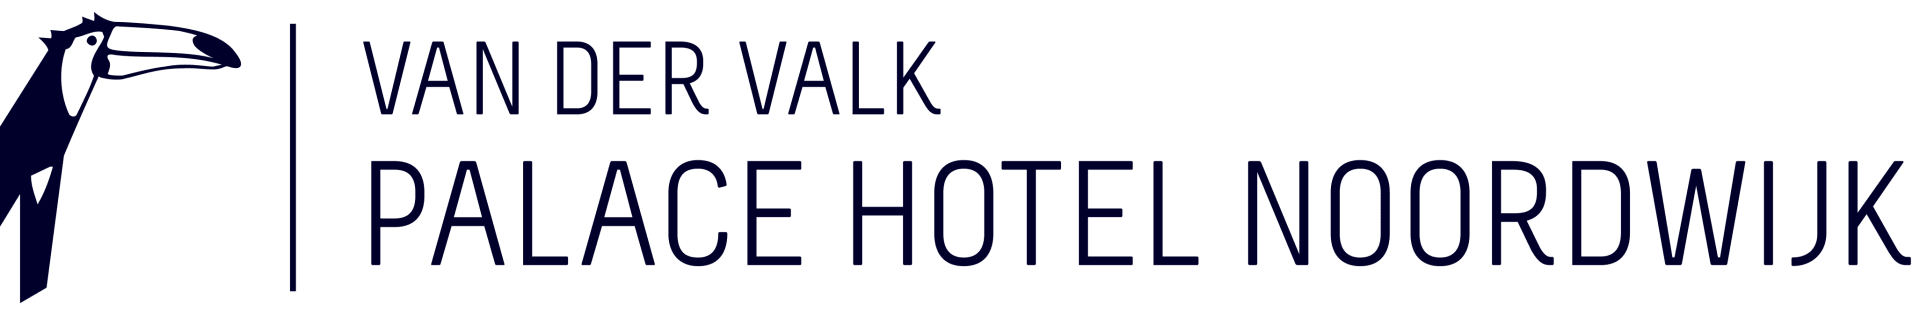 Palace Hotel Noordwijk logo